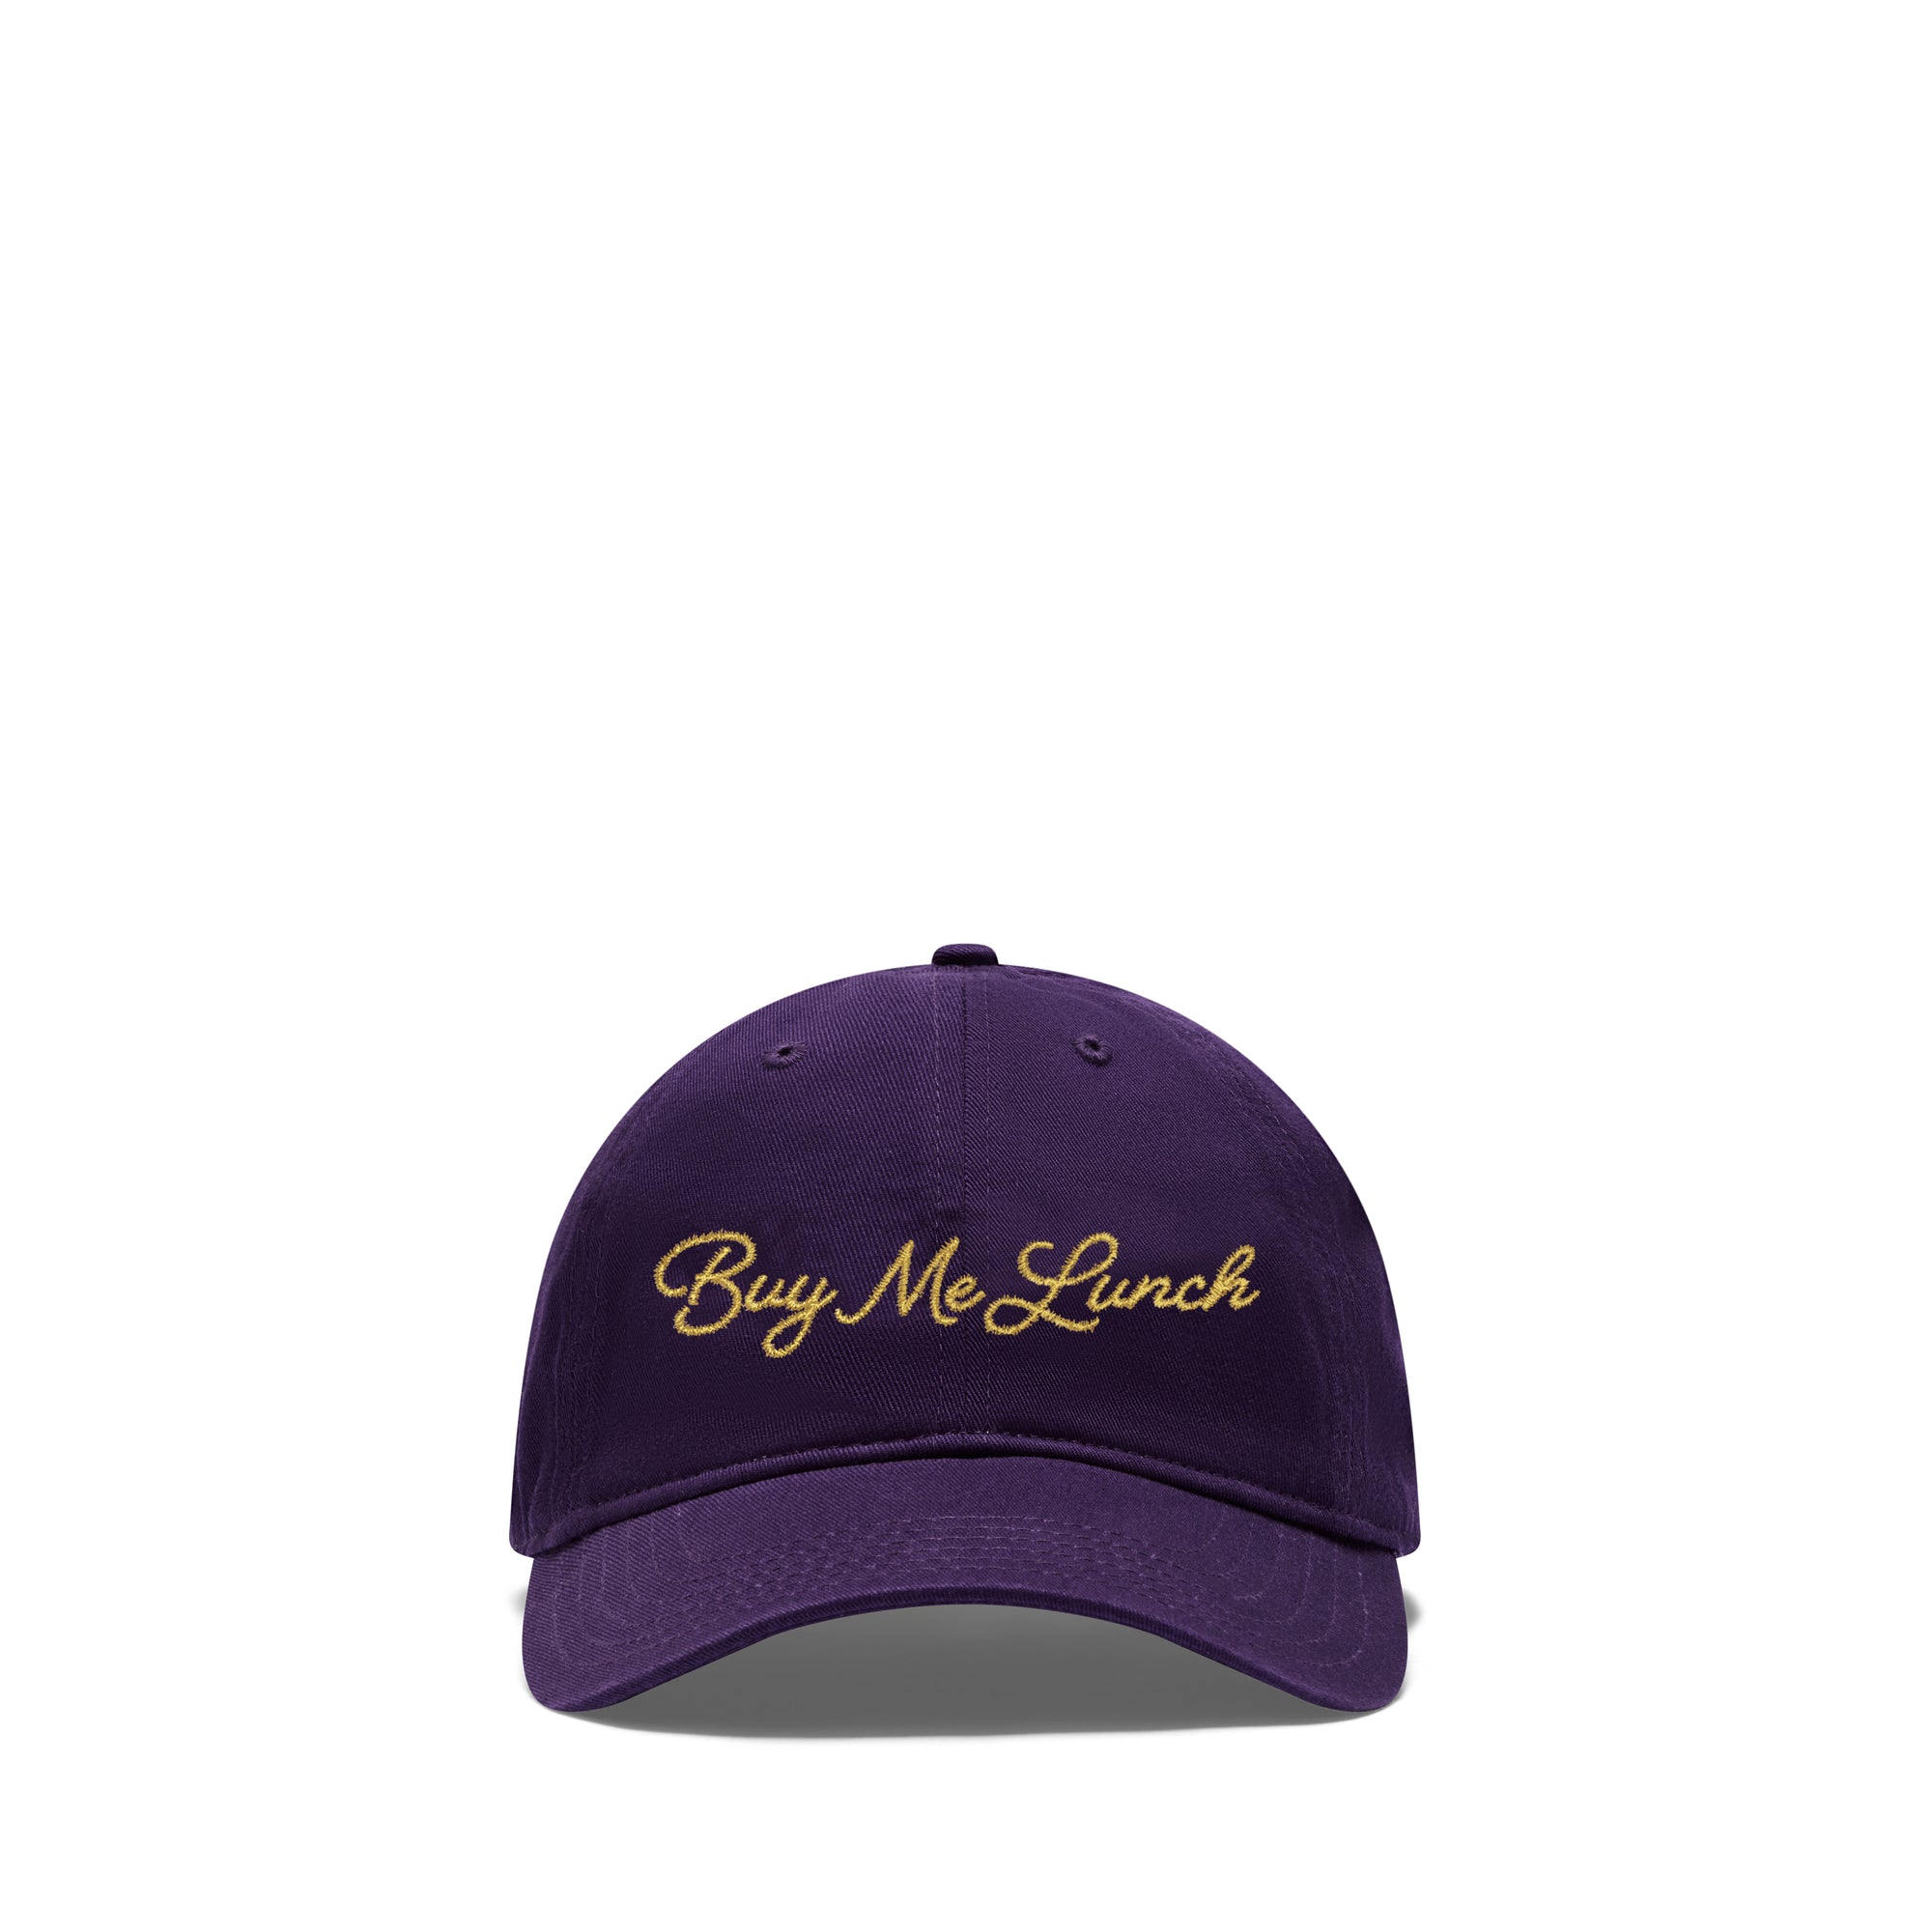 Idea Books -  Buy Me Lunch Hat - (Purple) view 1